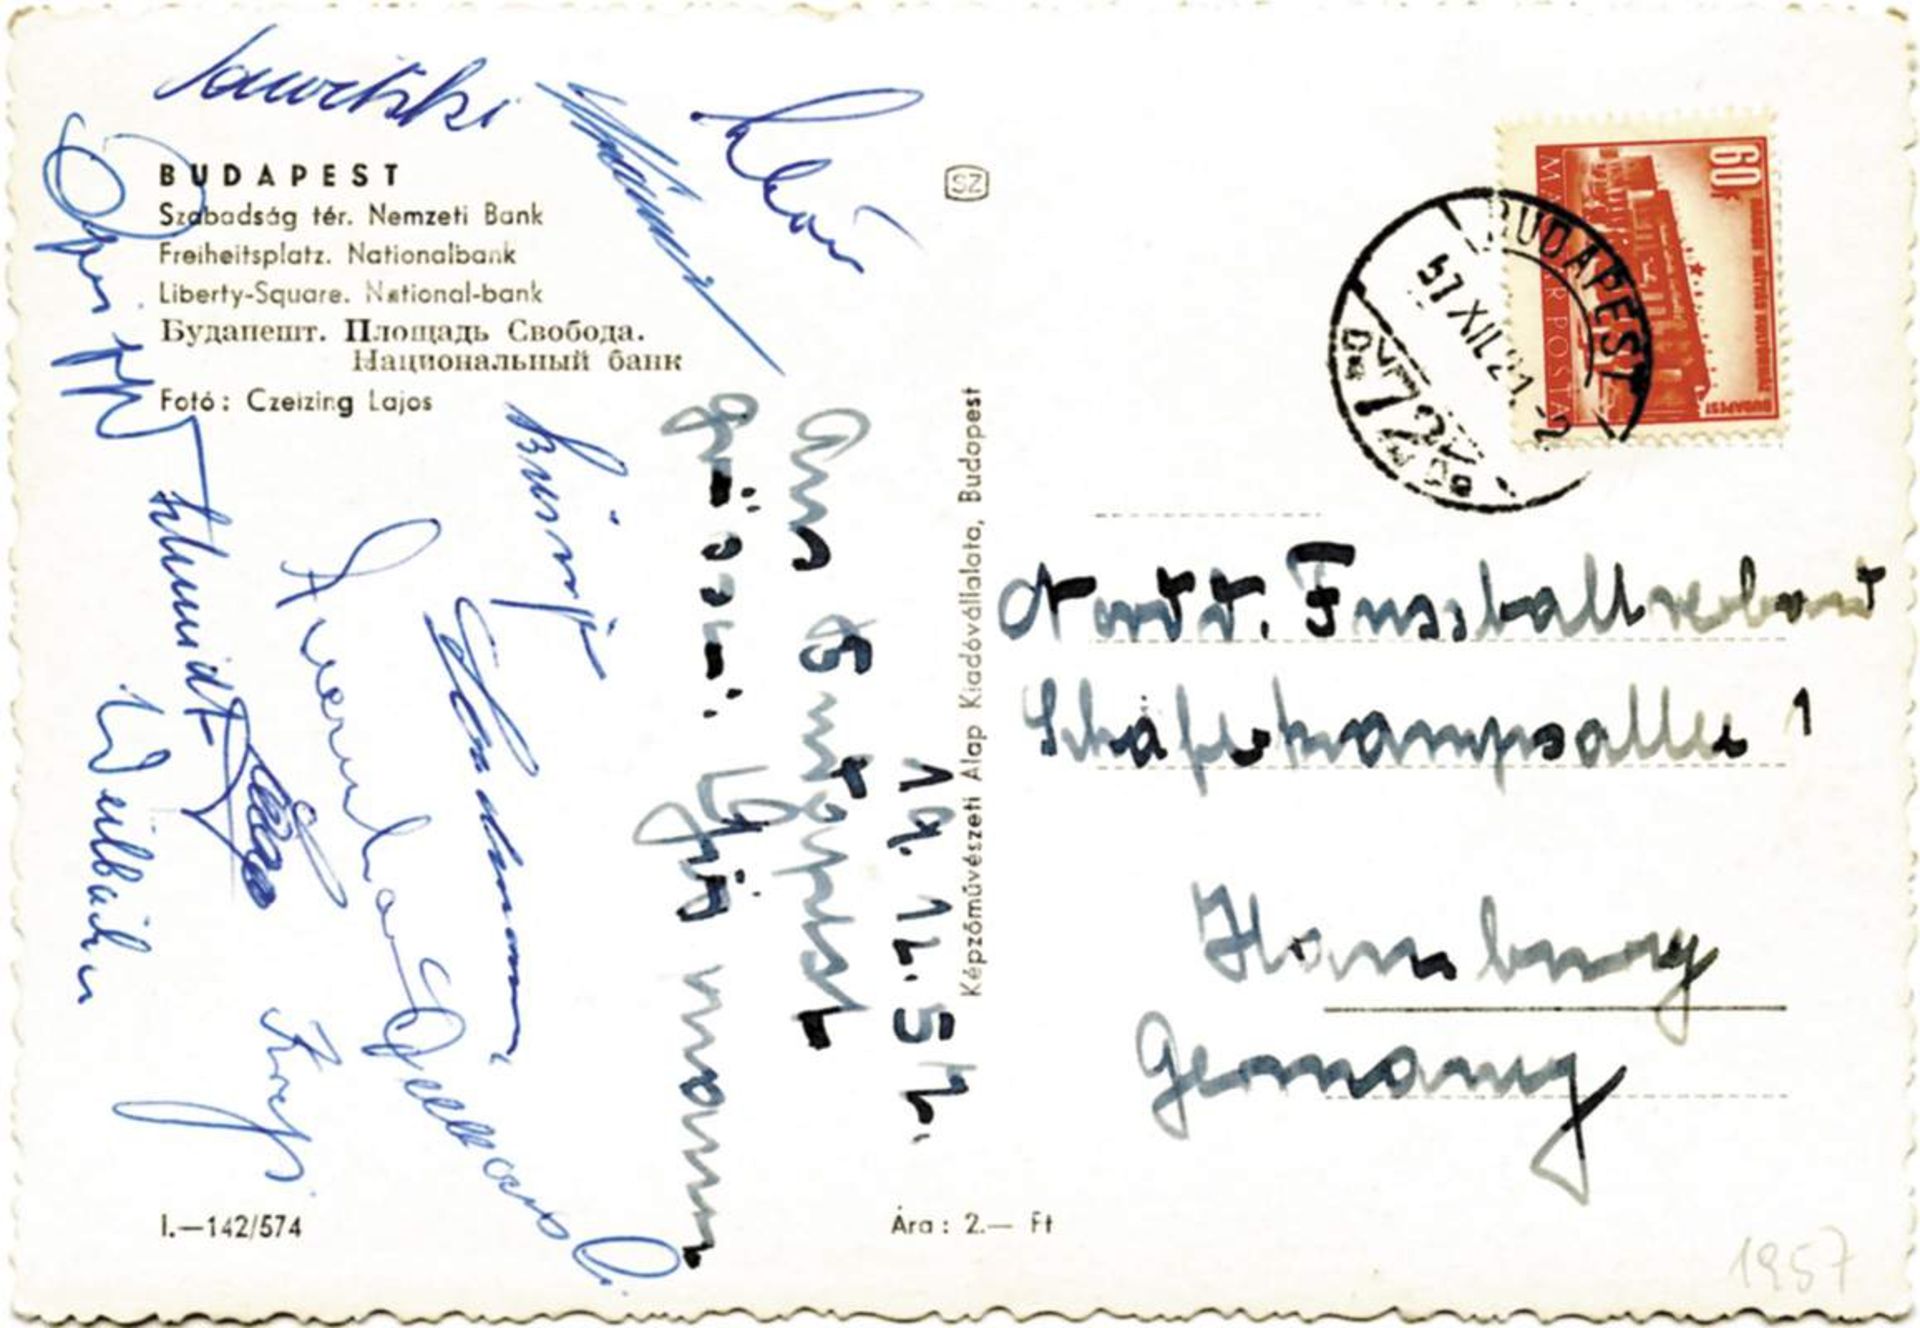 Autograph  Football 1957 German Team -Nationalmannschaft 1957 - Grußpostkarte aus Budapest vom 19.